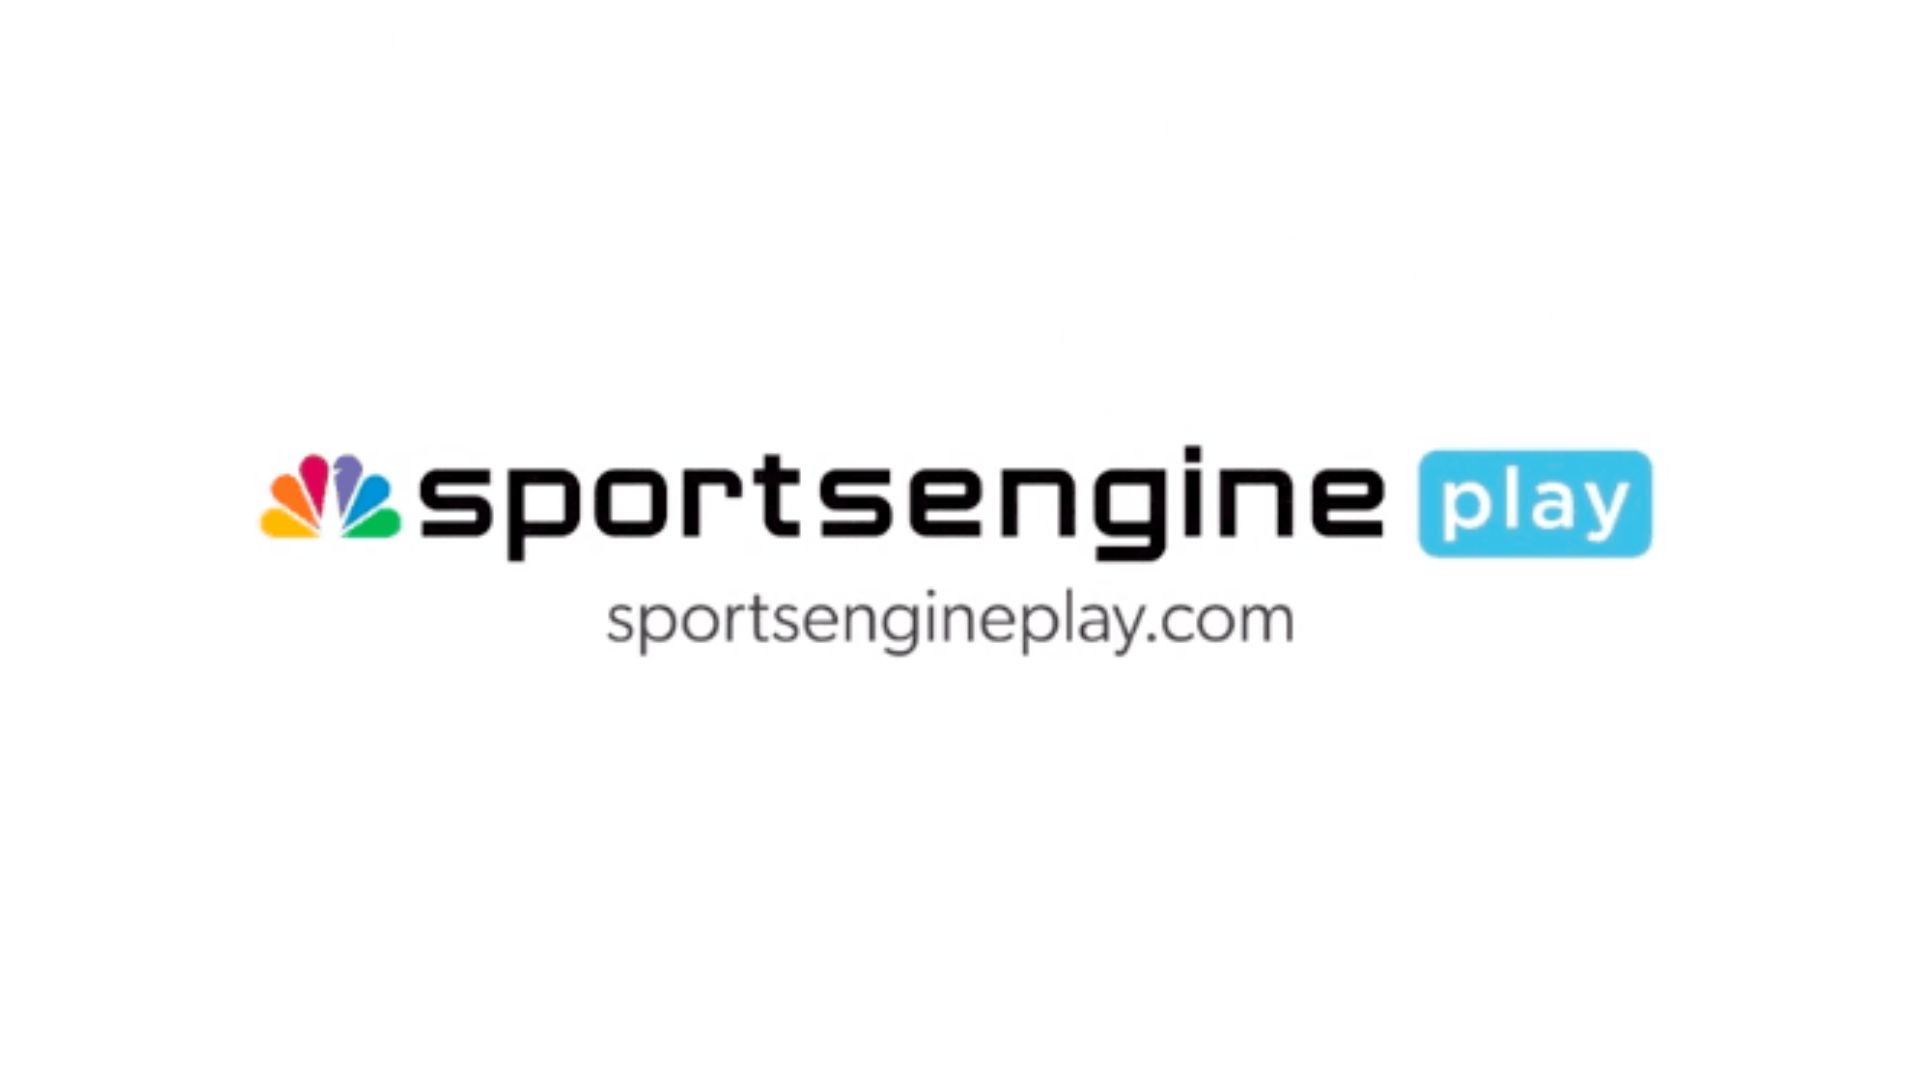 sportsengine play app